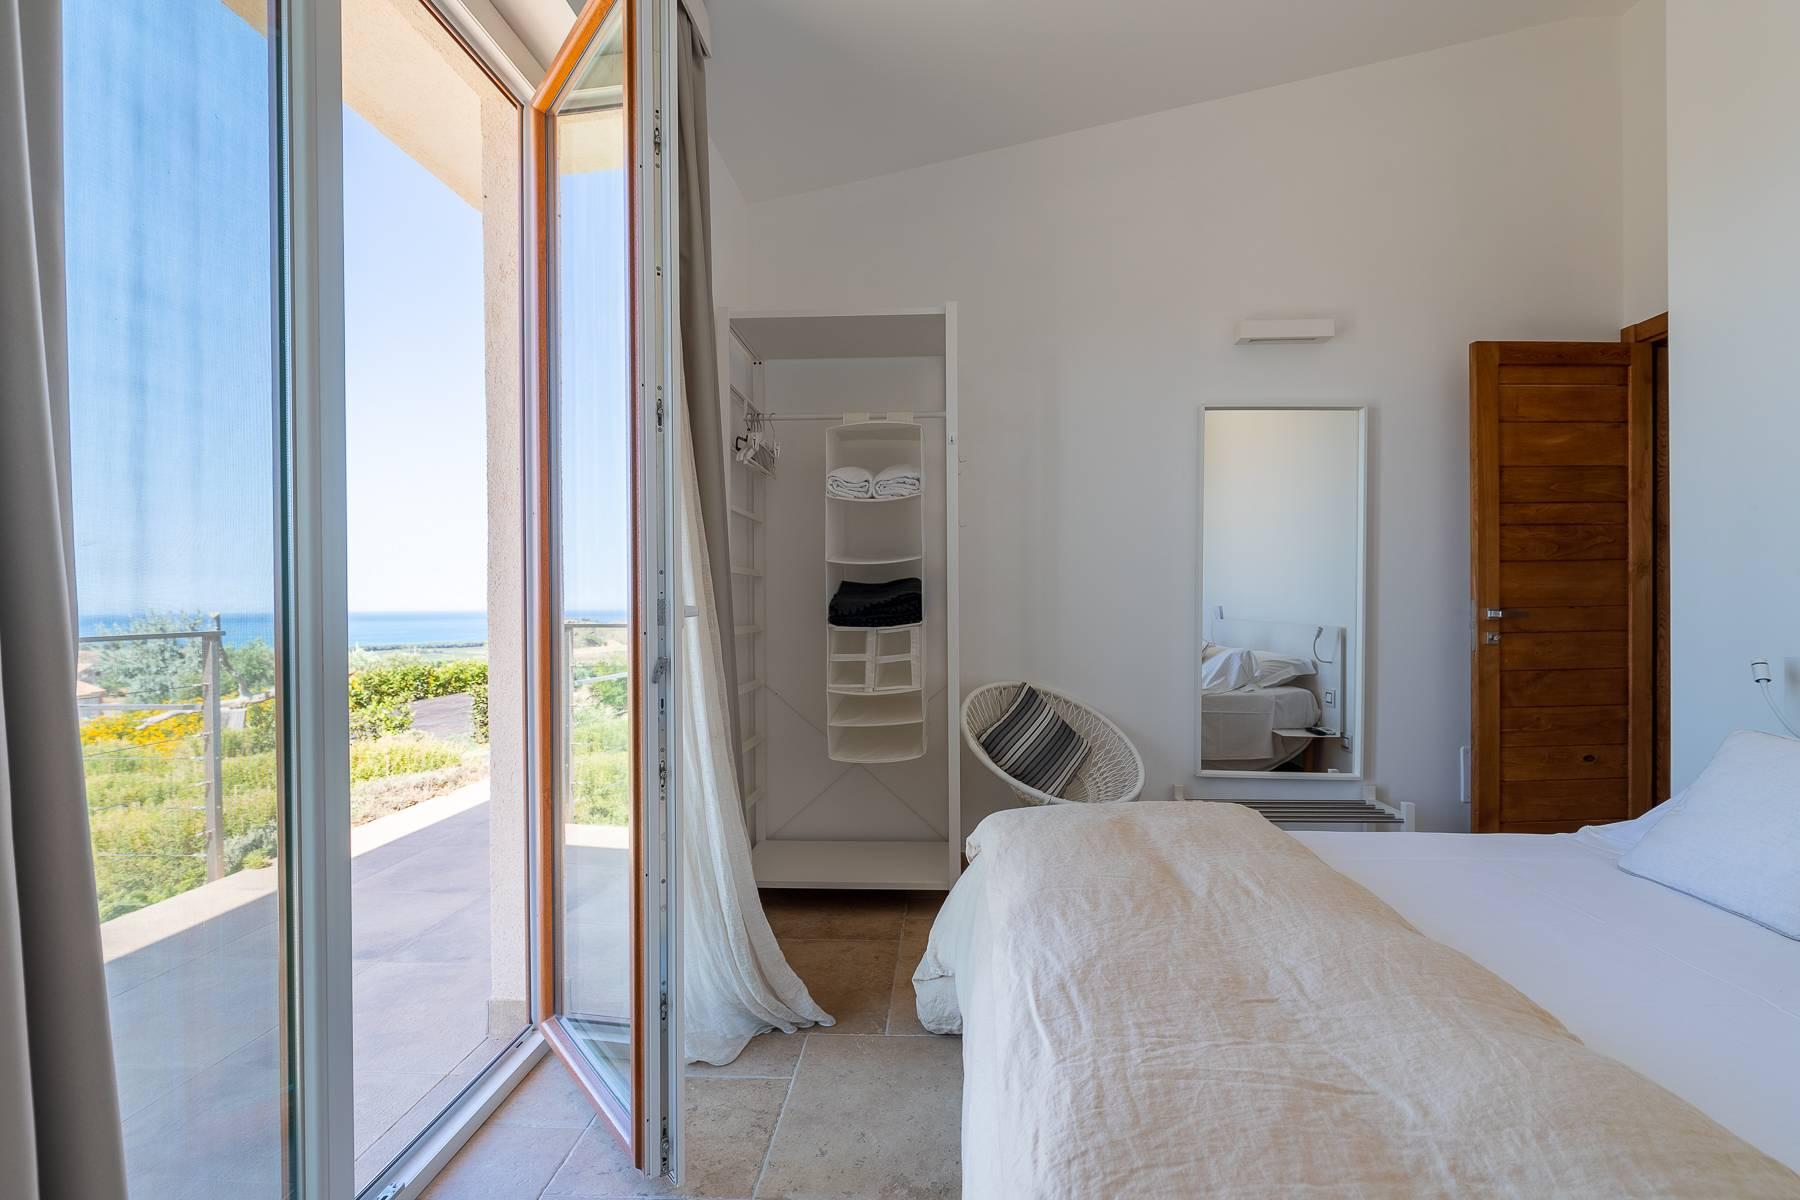 Exclusive villa with stunning views on the Mediterranean sea - 29